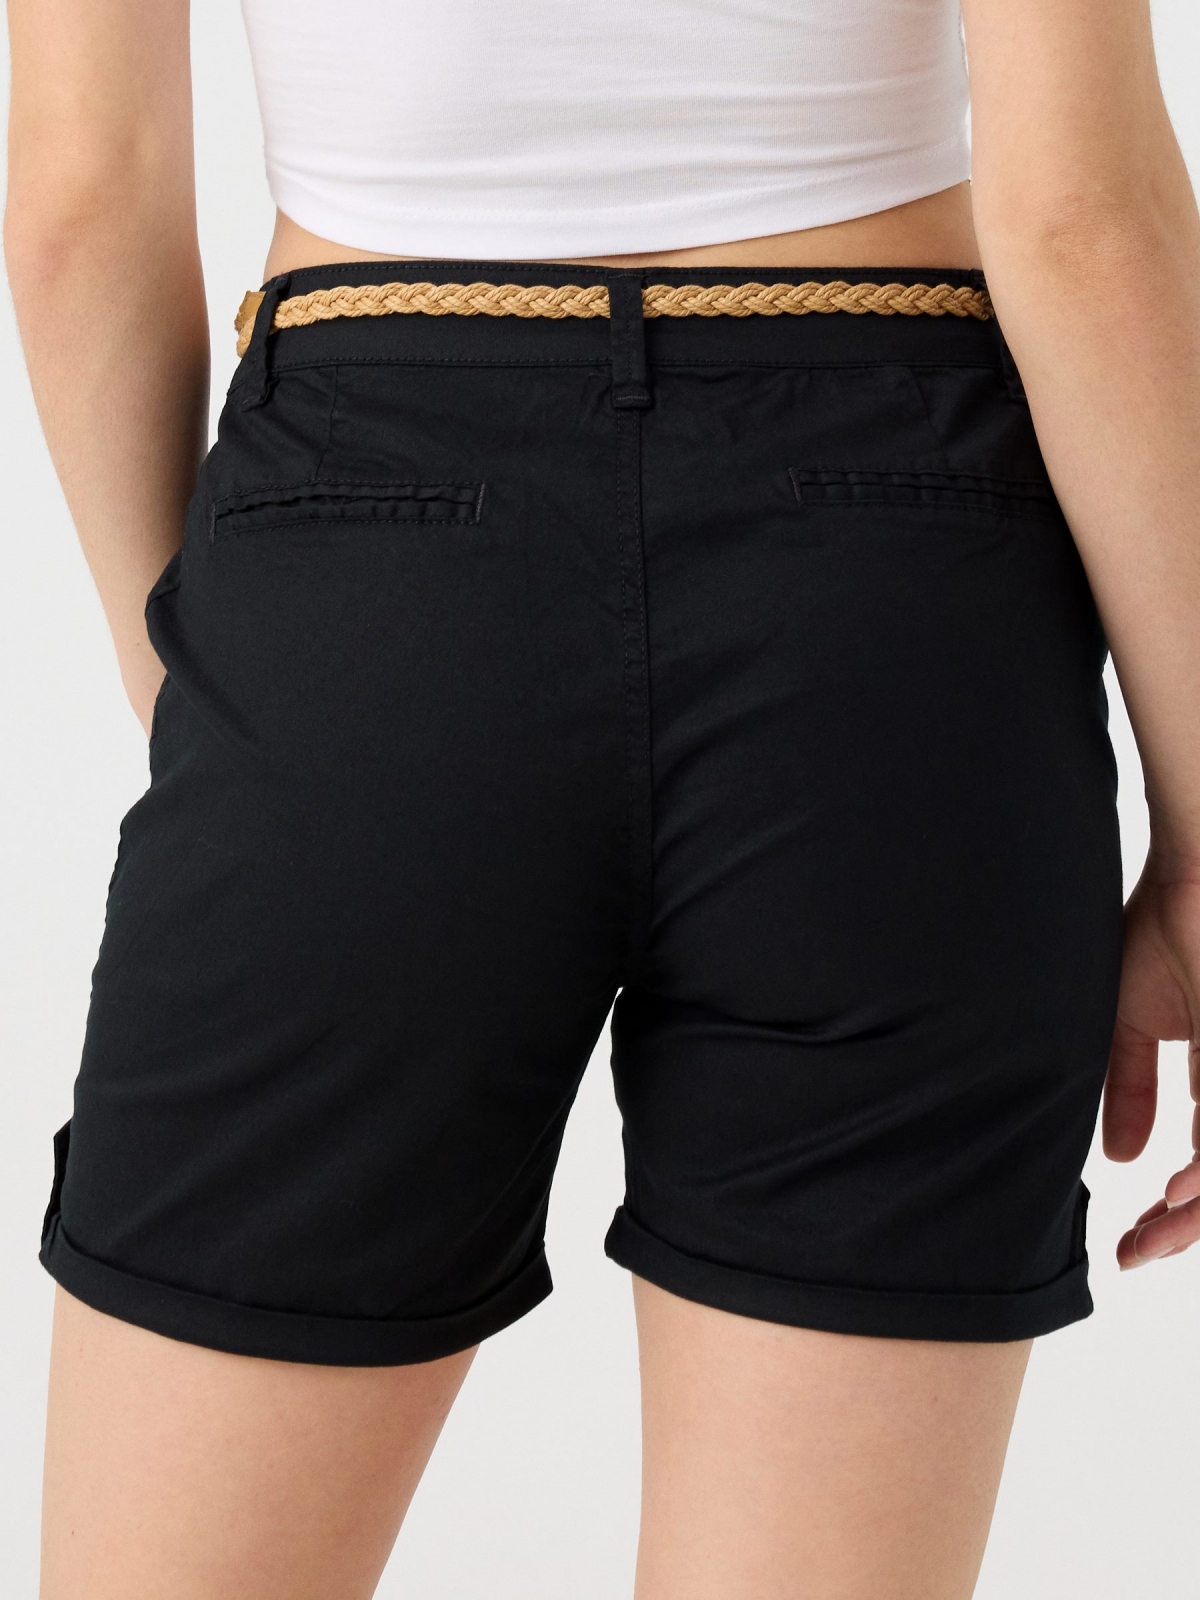 Braided belt shorts black detail view